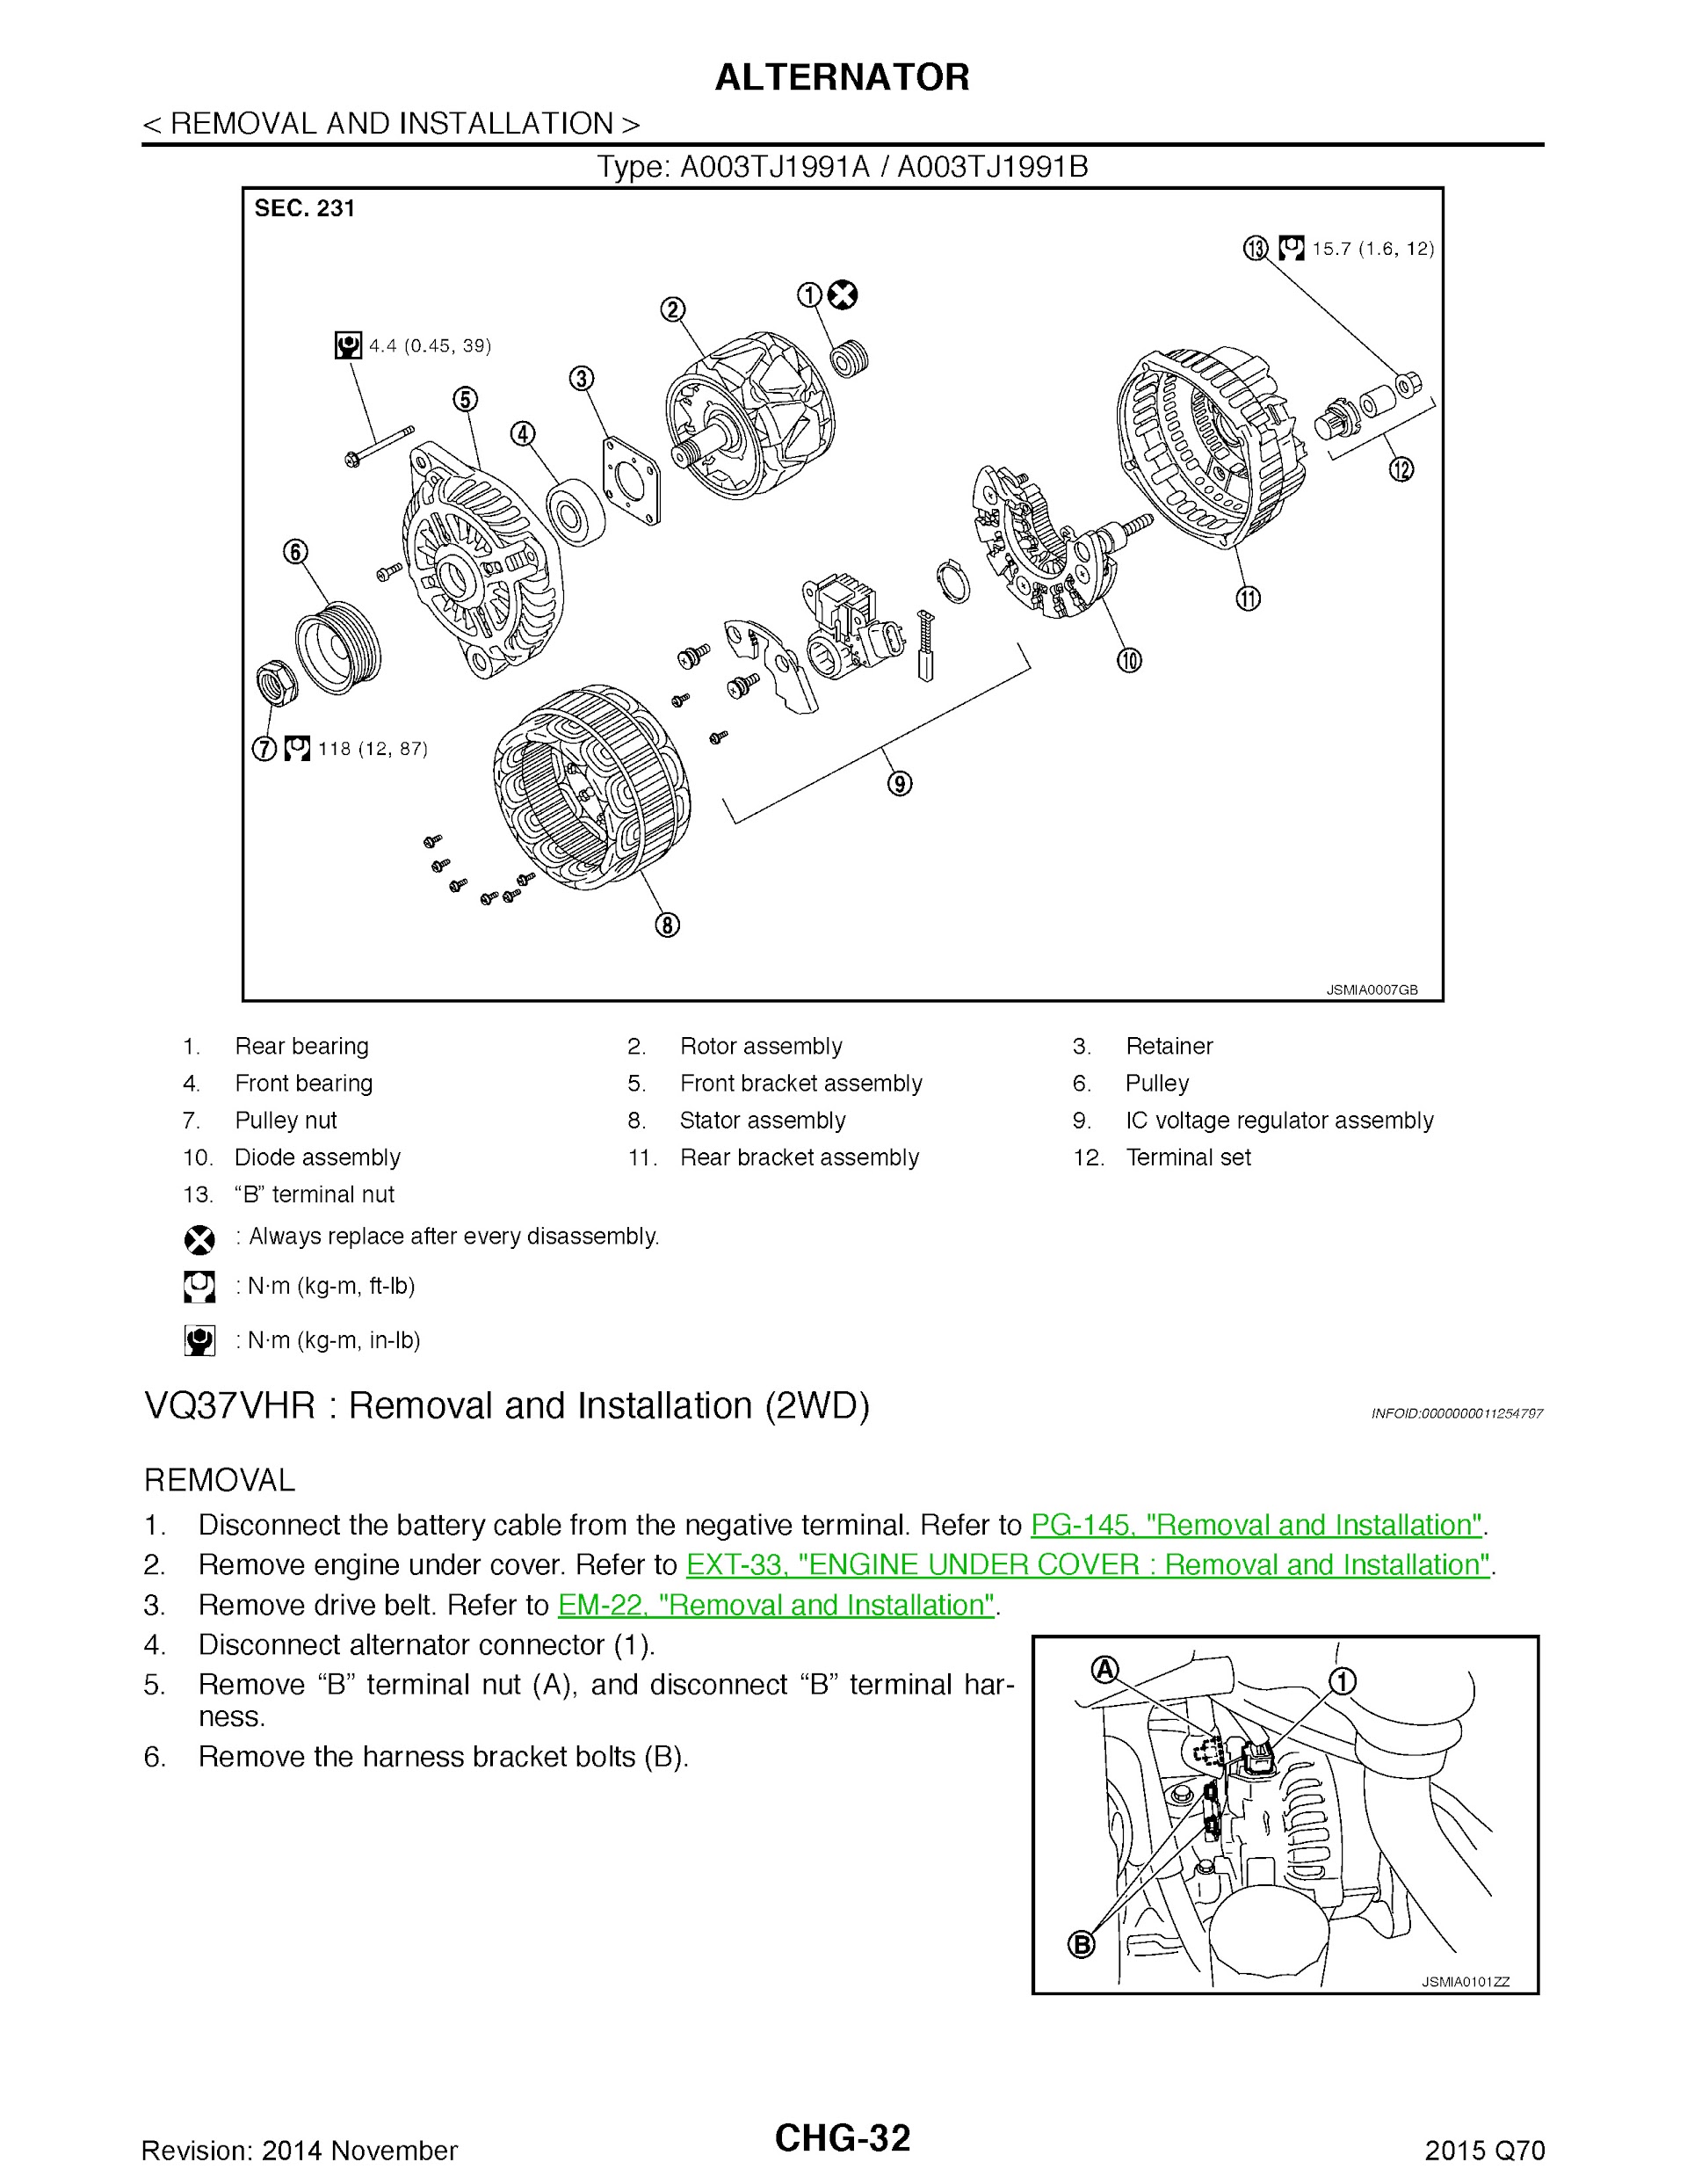 2015 Infiniti Q70 Repair Manual, Alternator Removal and Installation